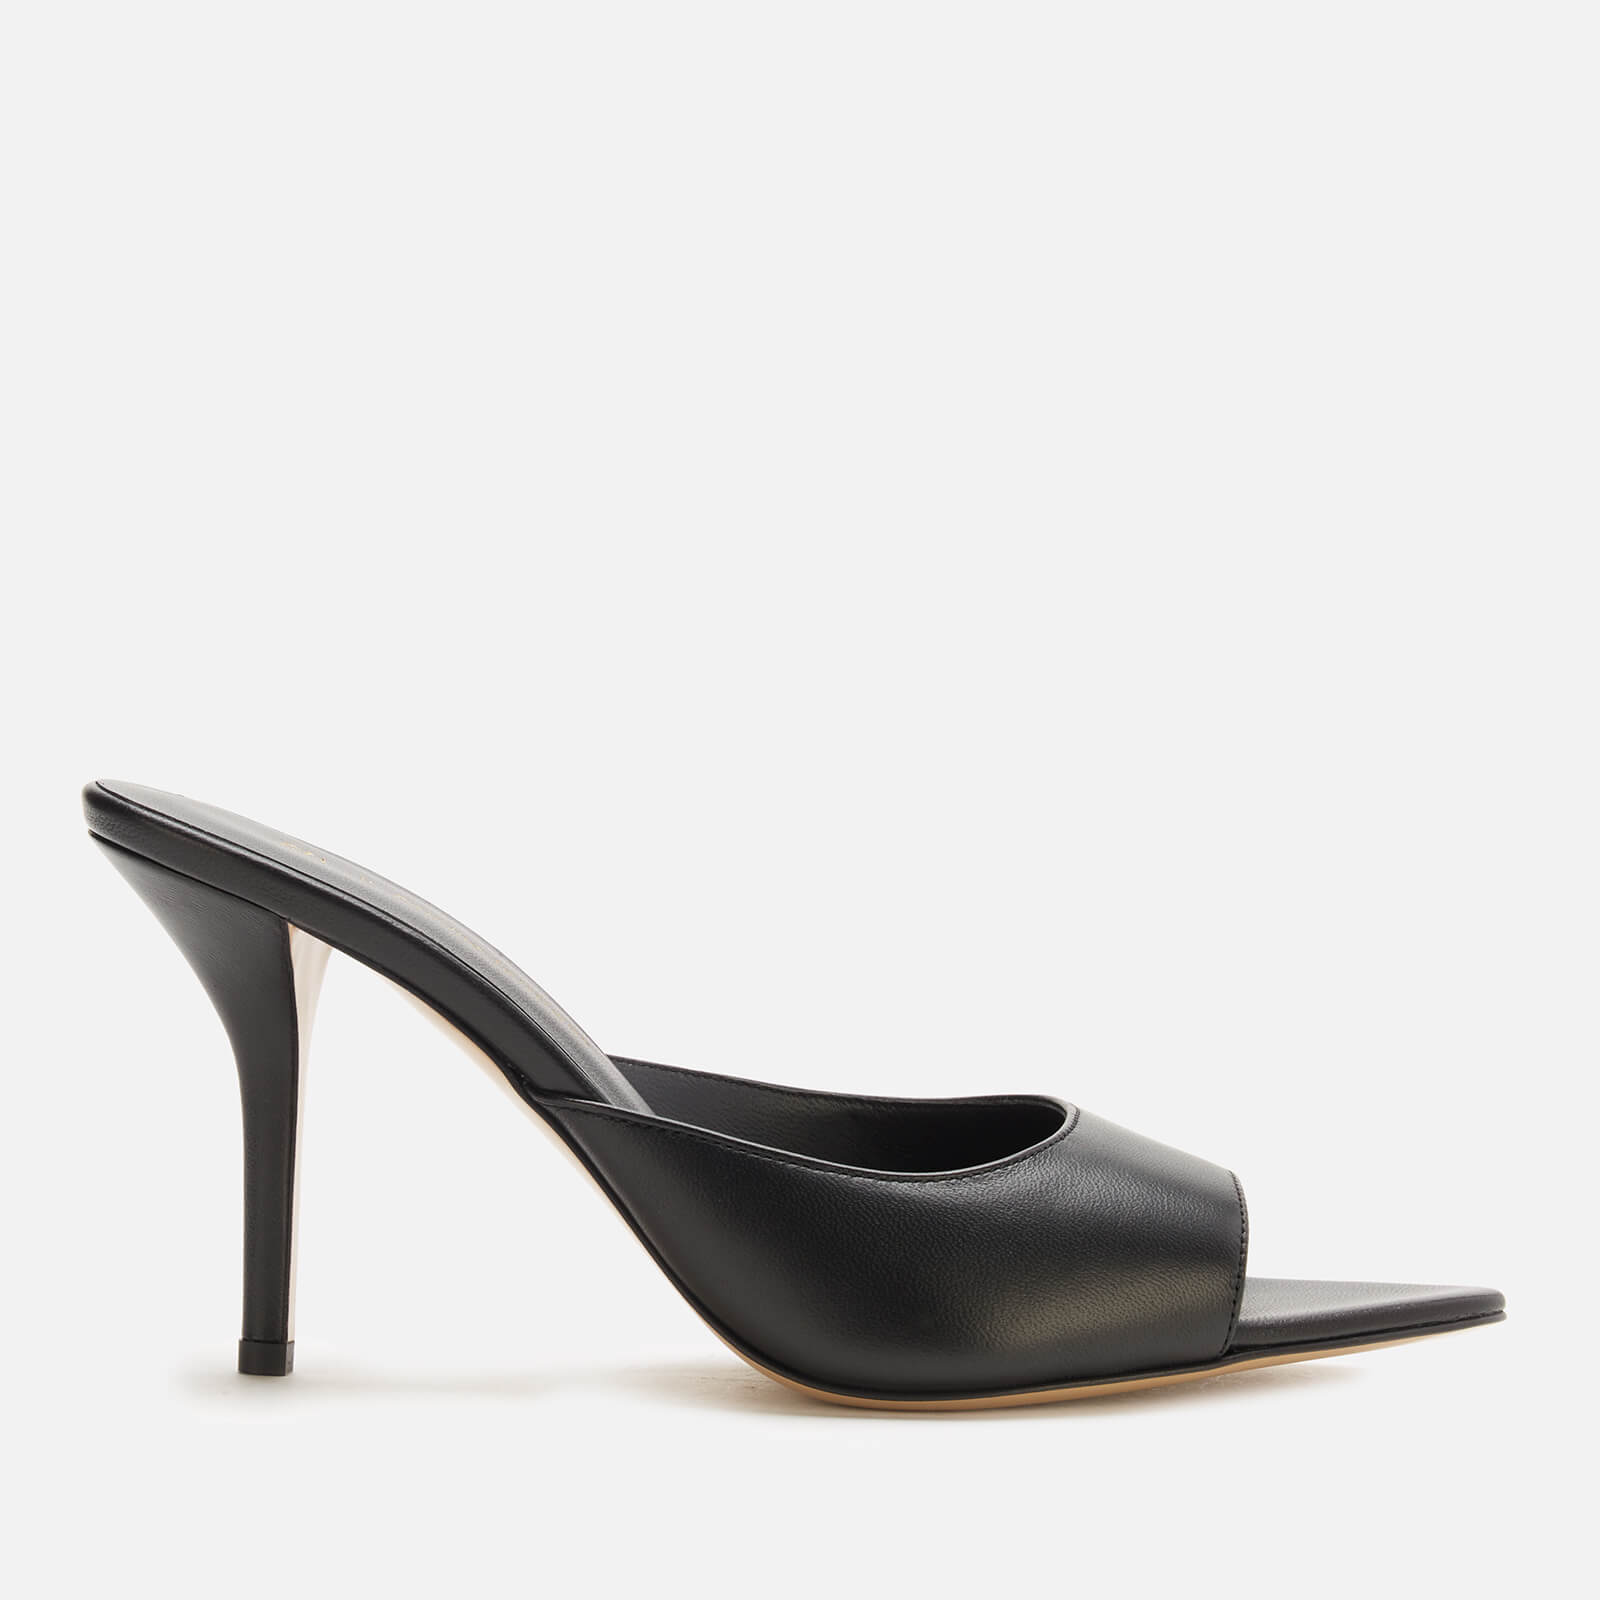 GIA X PERNILLE TEISBAEK Women's 85mm Pointed Toe Calf Leather Mules - Black - UK 3